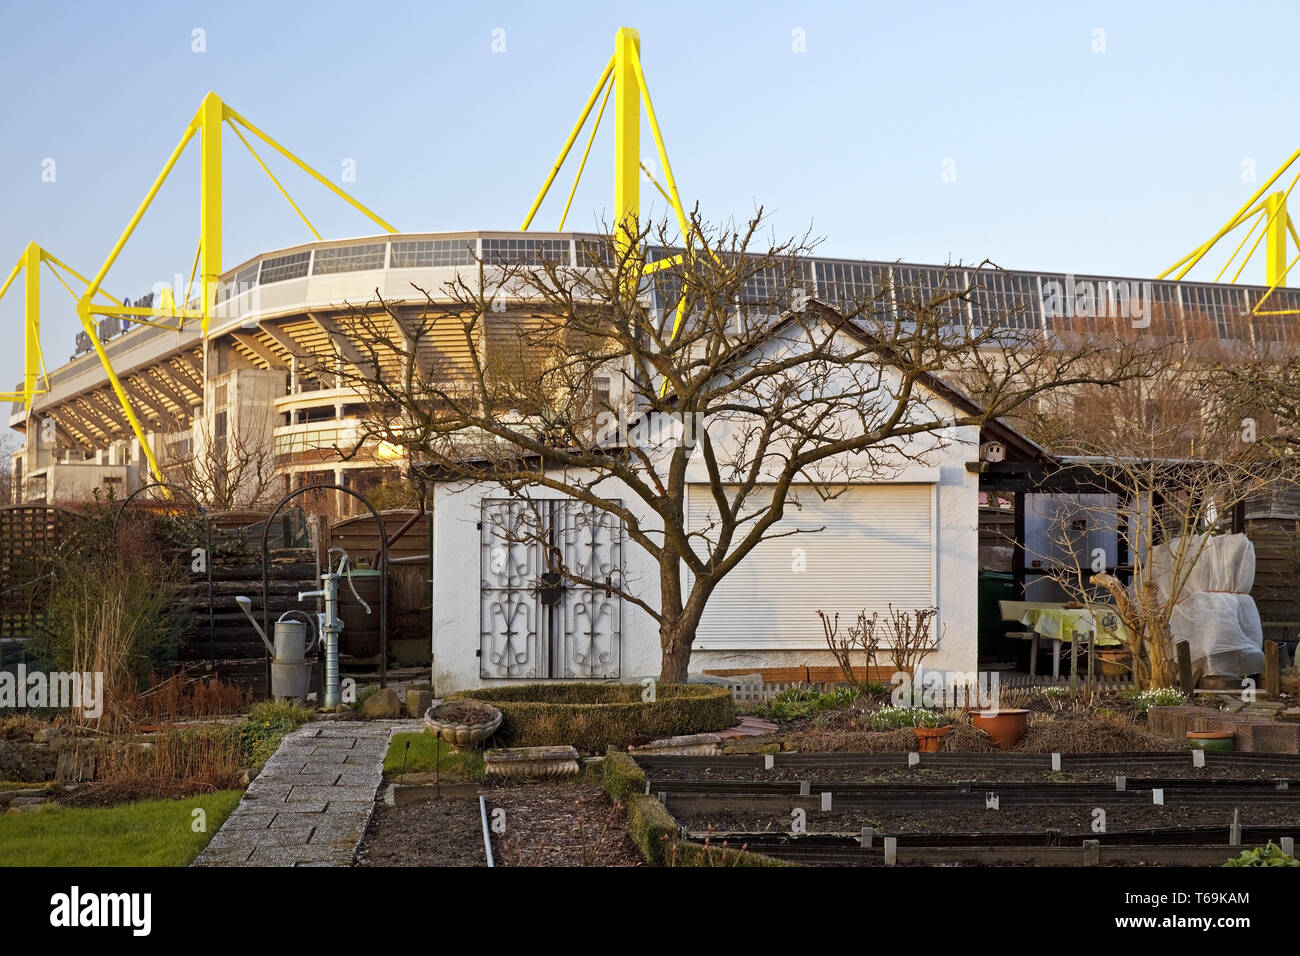 Spécial jardin en face de stade de football Signal Iduna Park de BVB, Dortmund, Allemagne Banque D'Images